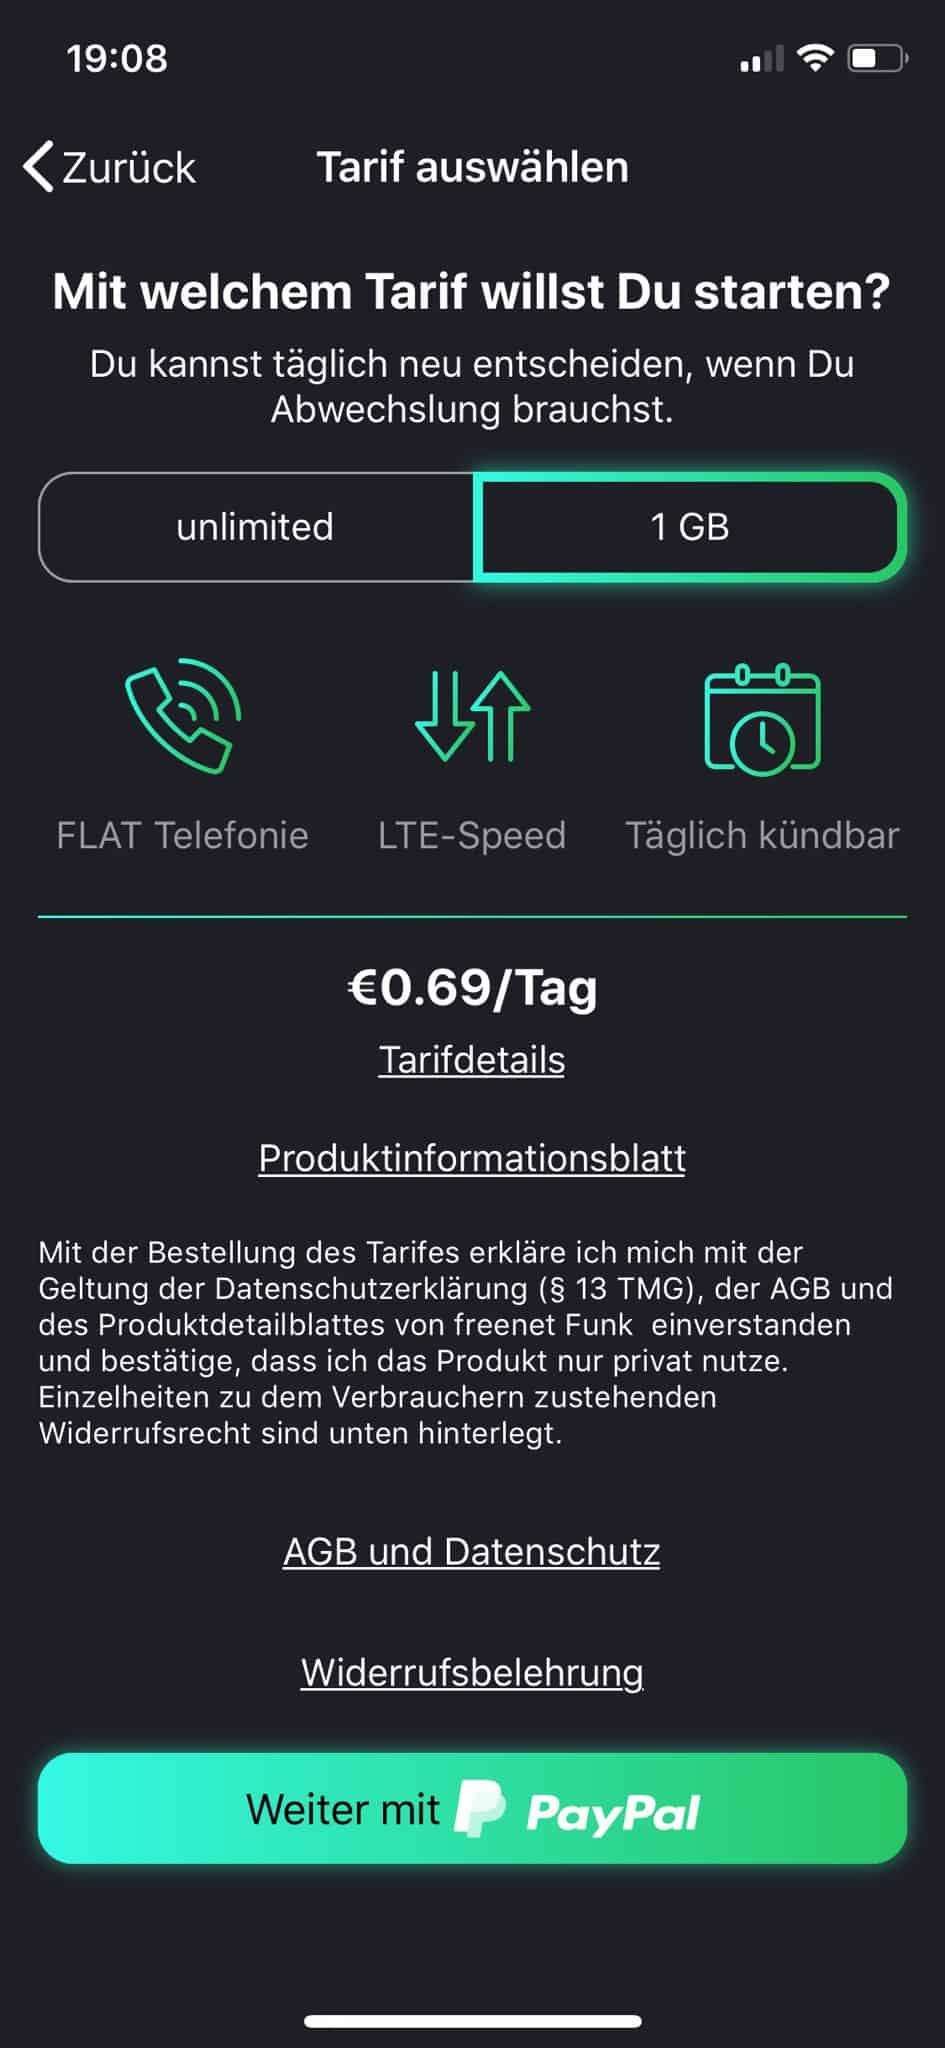 freenet FUNK - Smartphone-App - Tarif auswählen - freenet FUNK 1 GB-Tarif